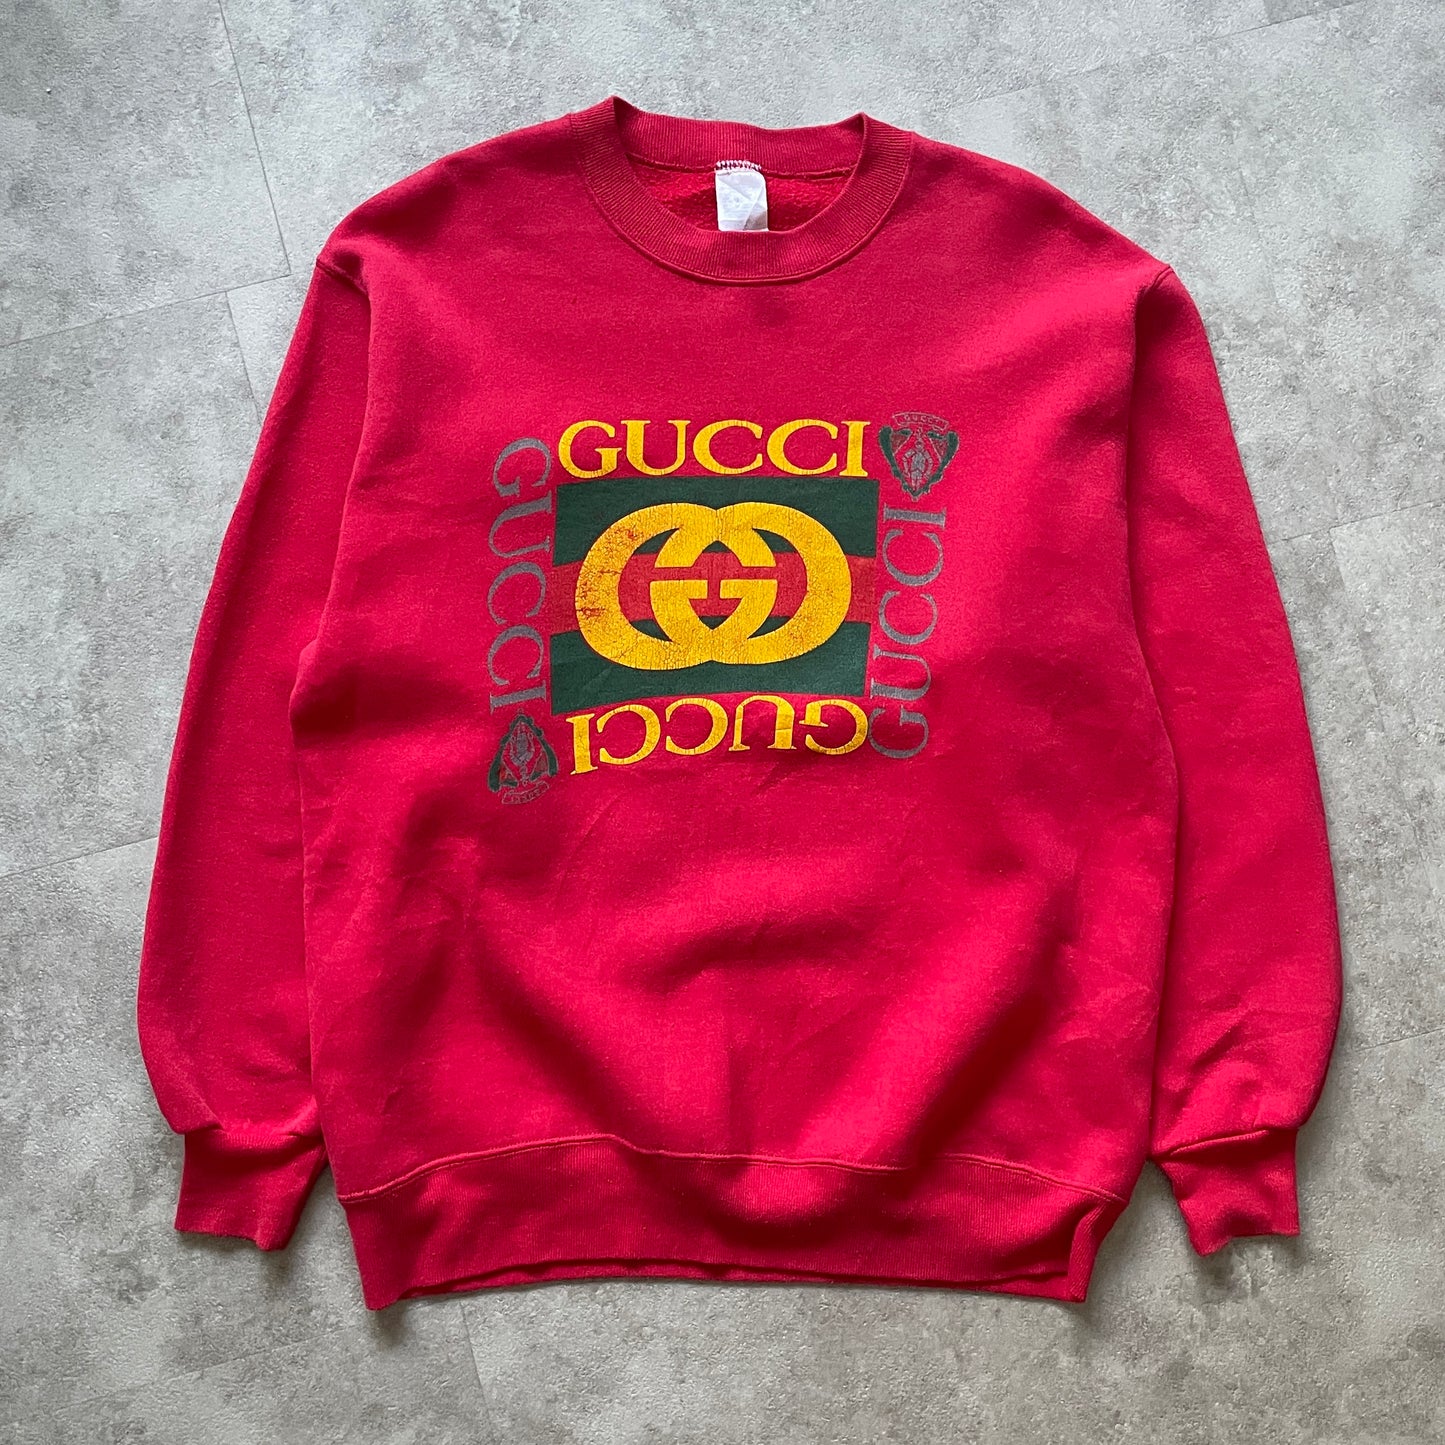 Vintage 90s Gucci Sweatshirt (Large)